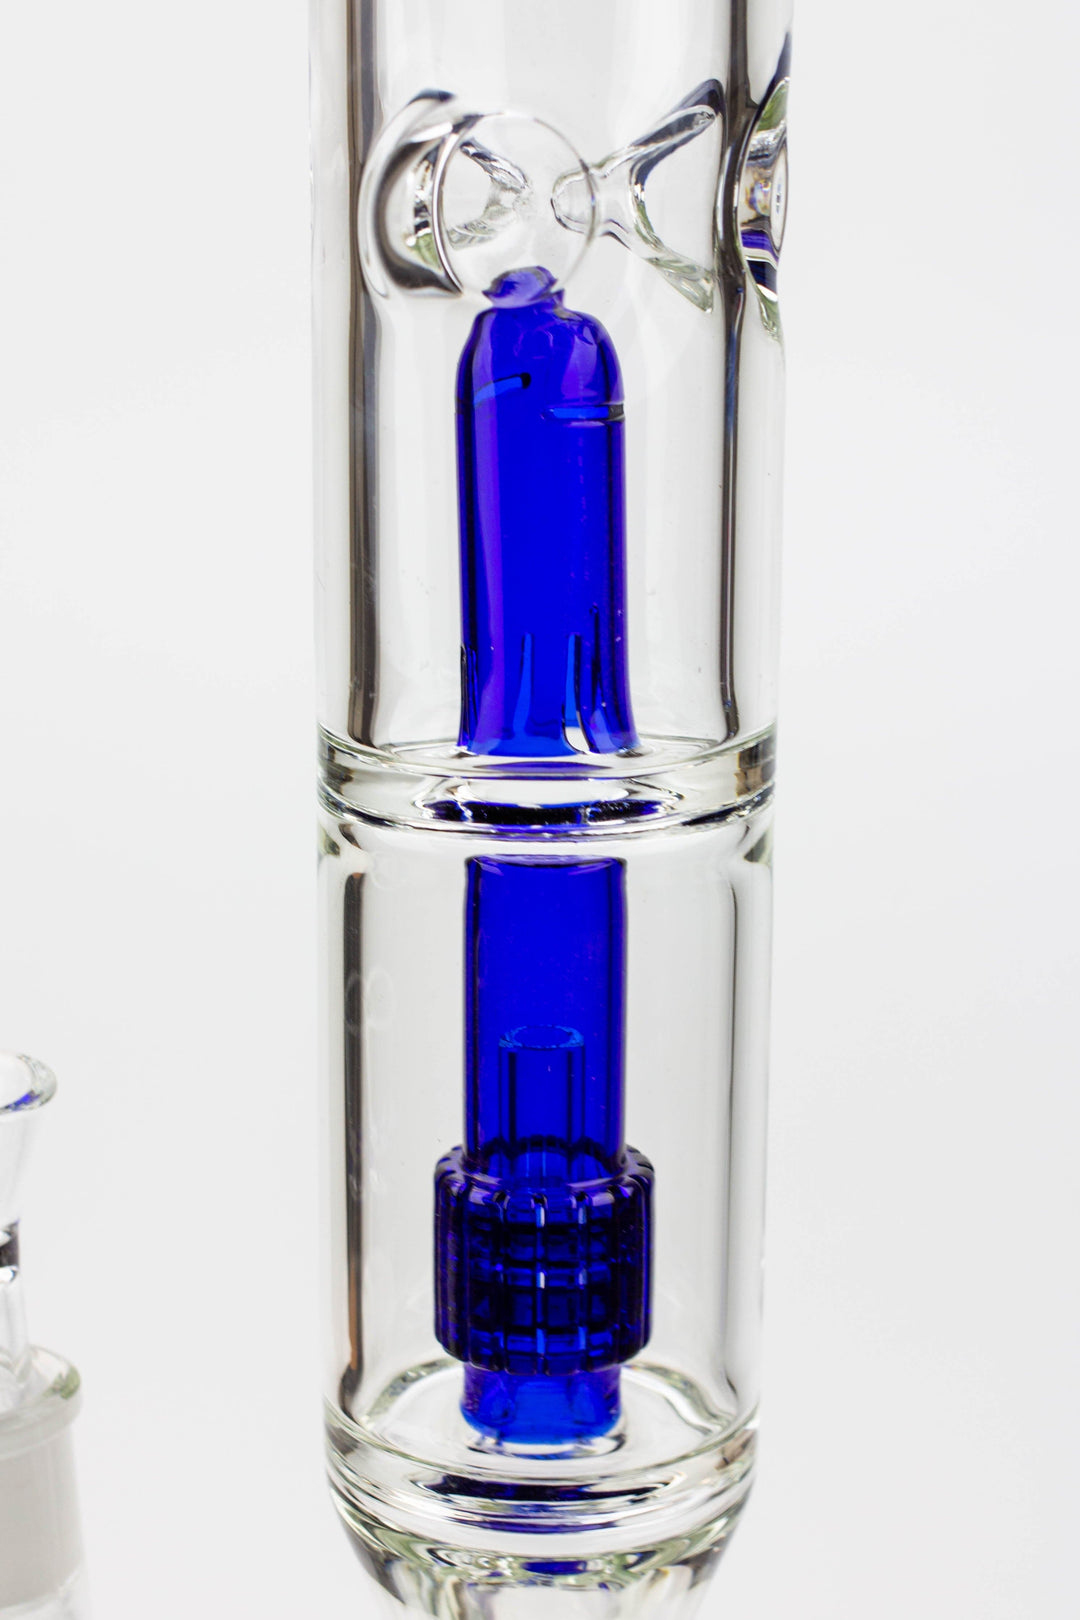 Kush inline diffuser splash guard glass water pipes_14